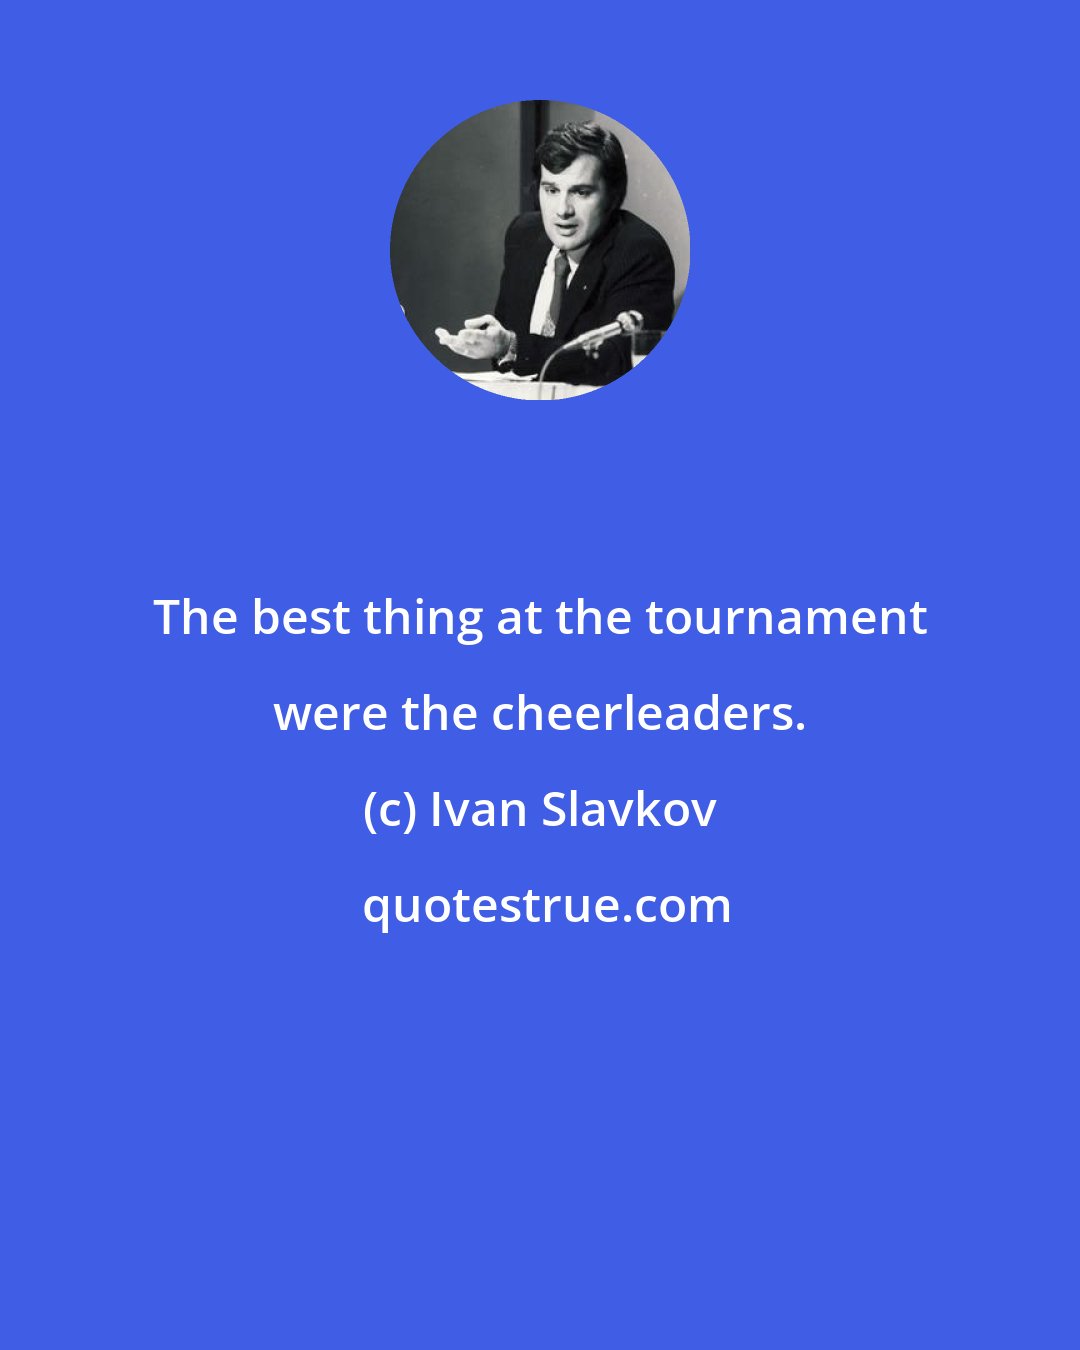 Ivan Slavkov: The best thing at the tournament were the cheerleaders.